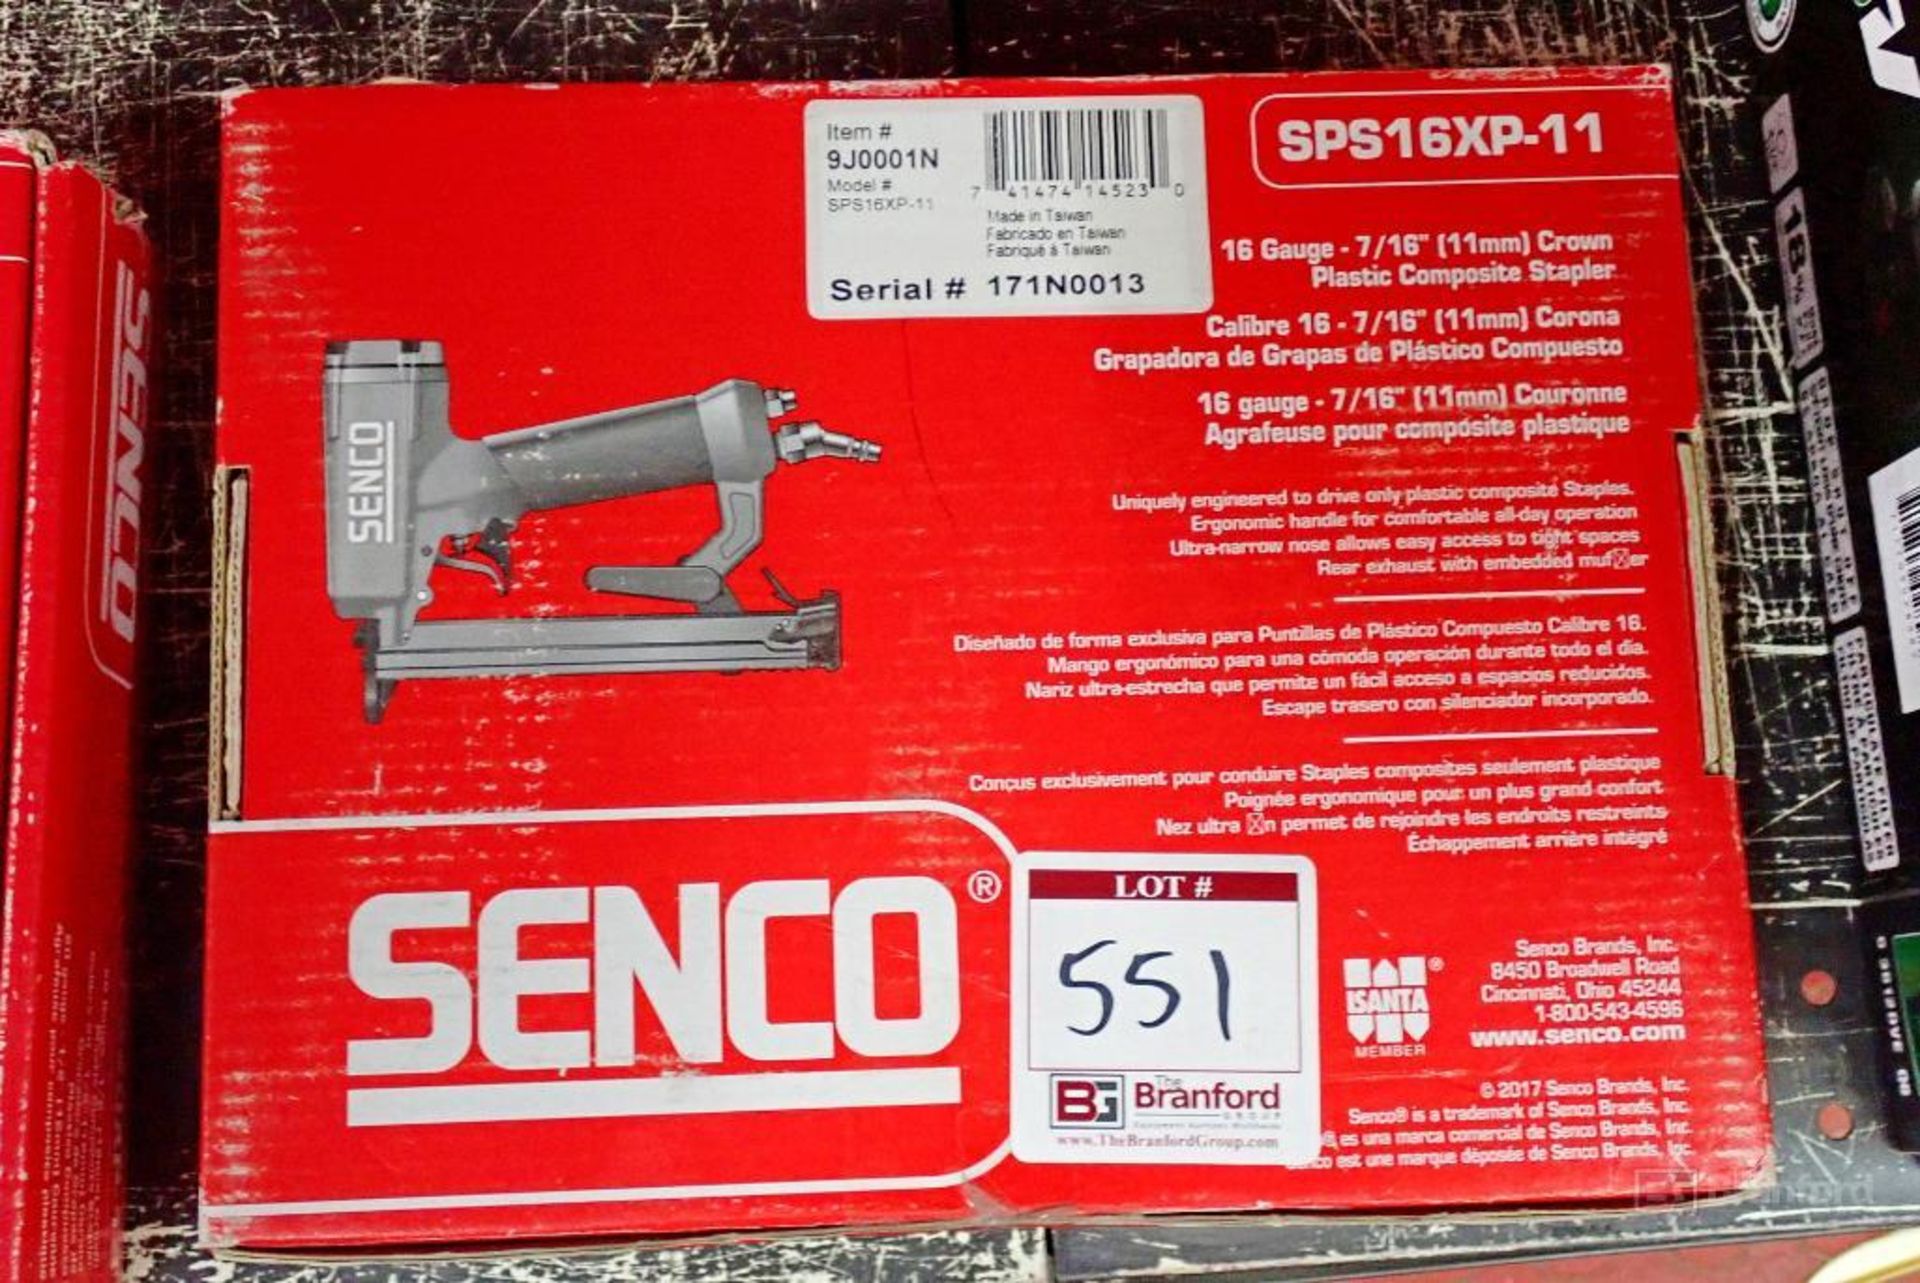 Senco SPS16XP-11 16 Gauge 7/16" (11mm) Crown Plastic Composite Stapler